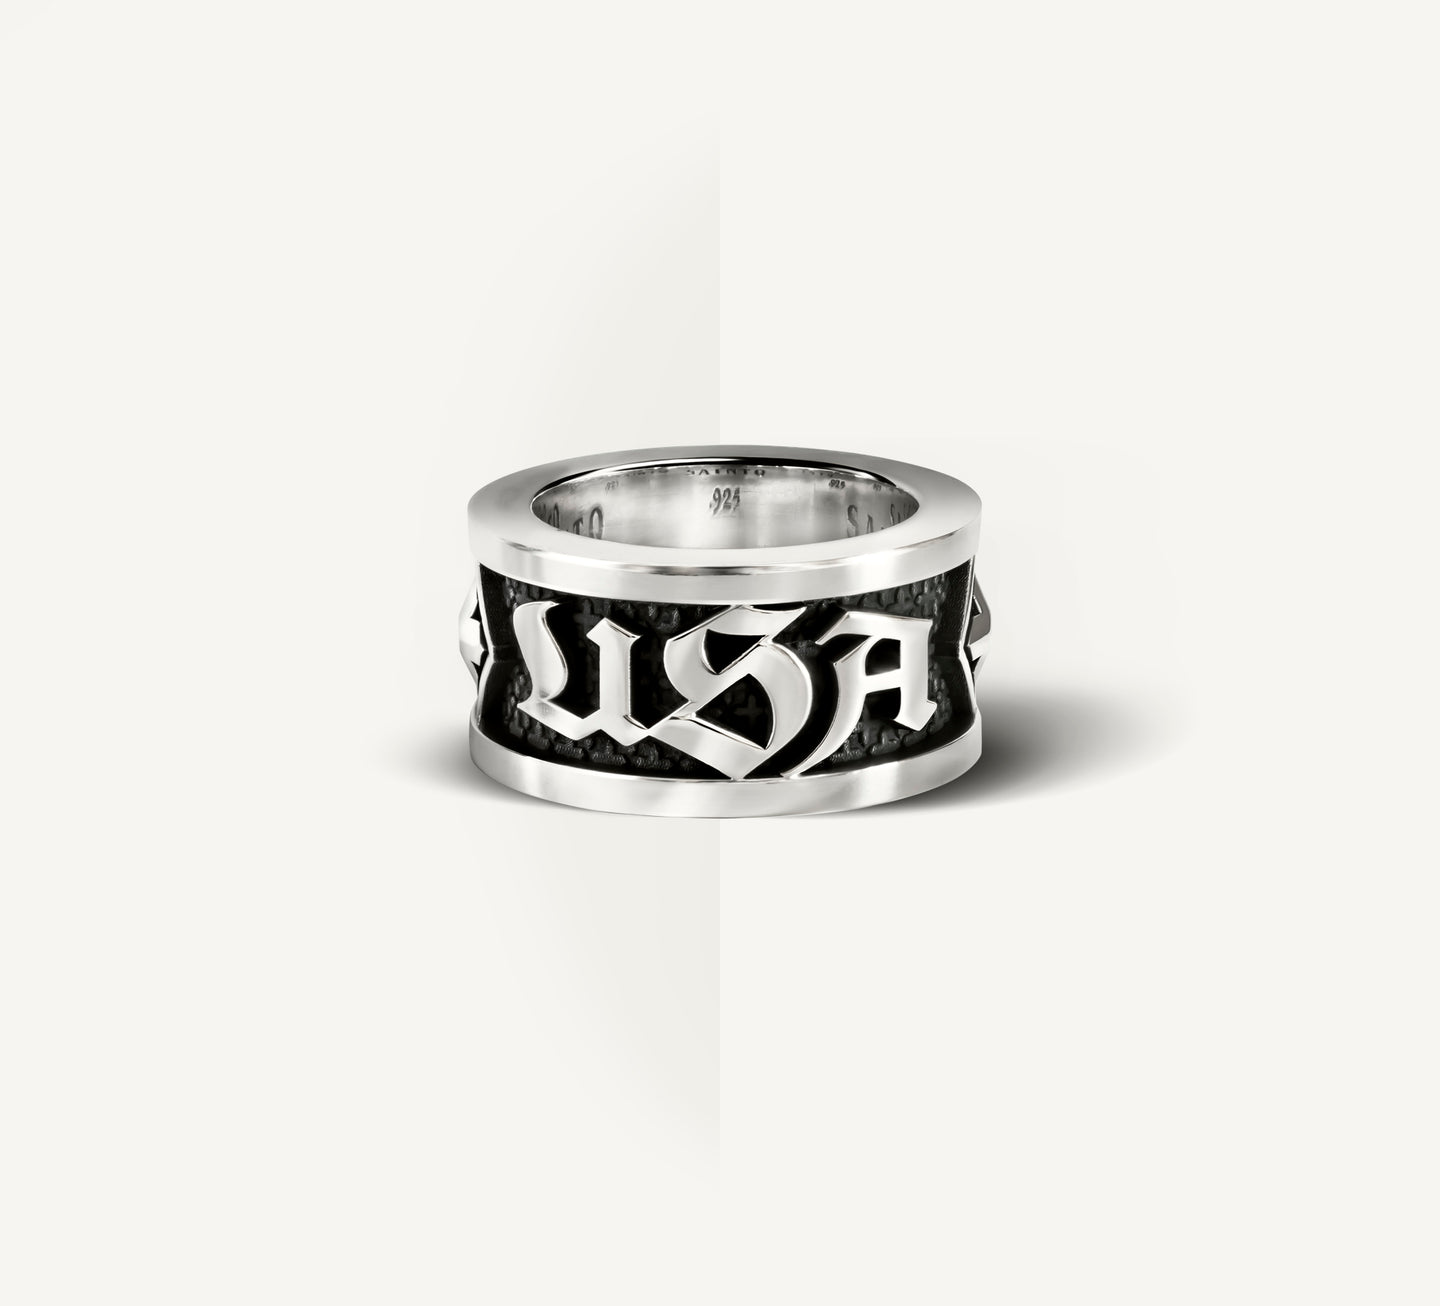 USA Band Ring